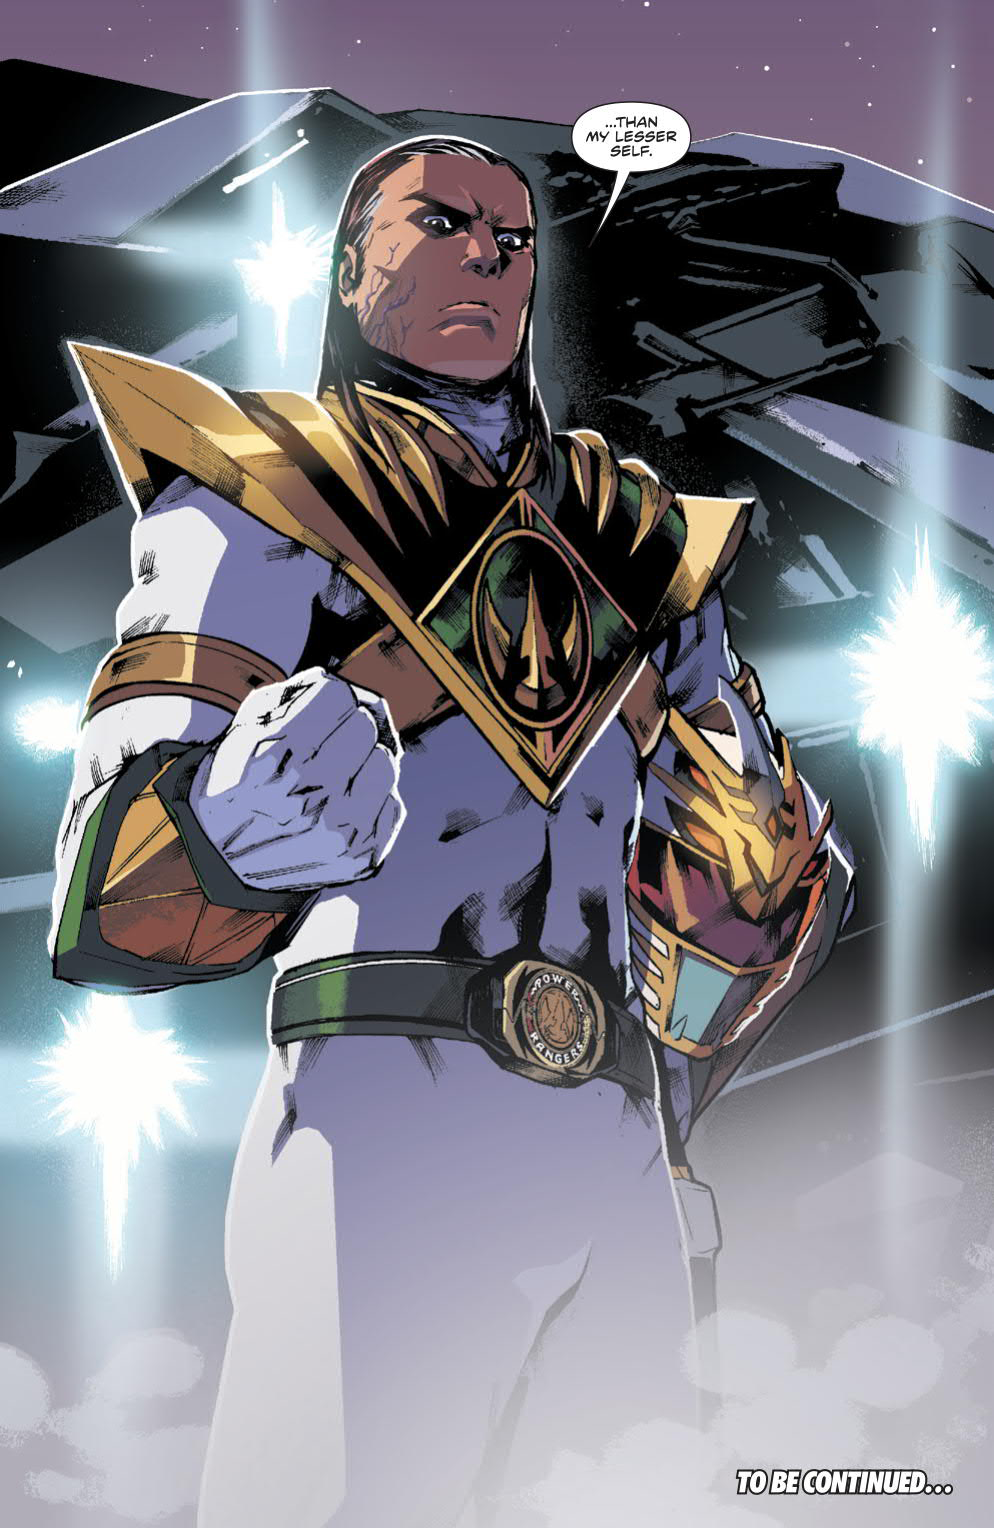 The Identity Of The Power Rangers Comic’s New Evil Ranger Has Been Revealed